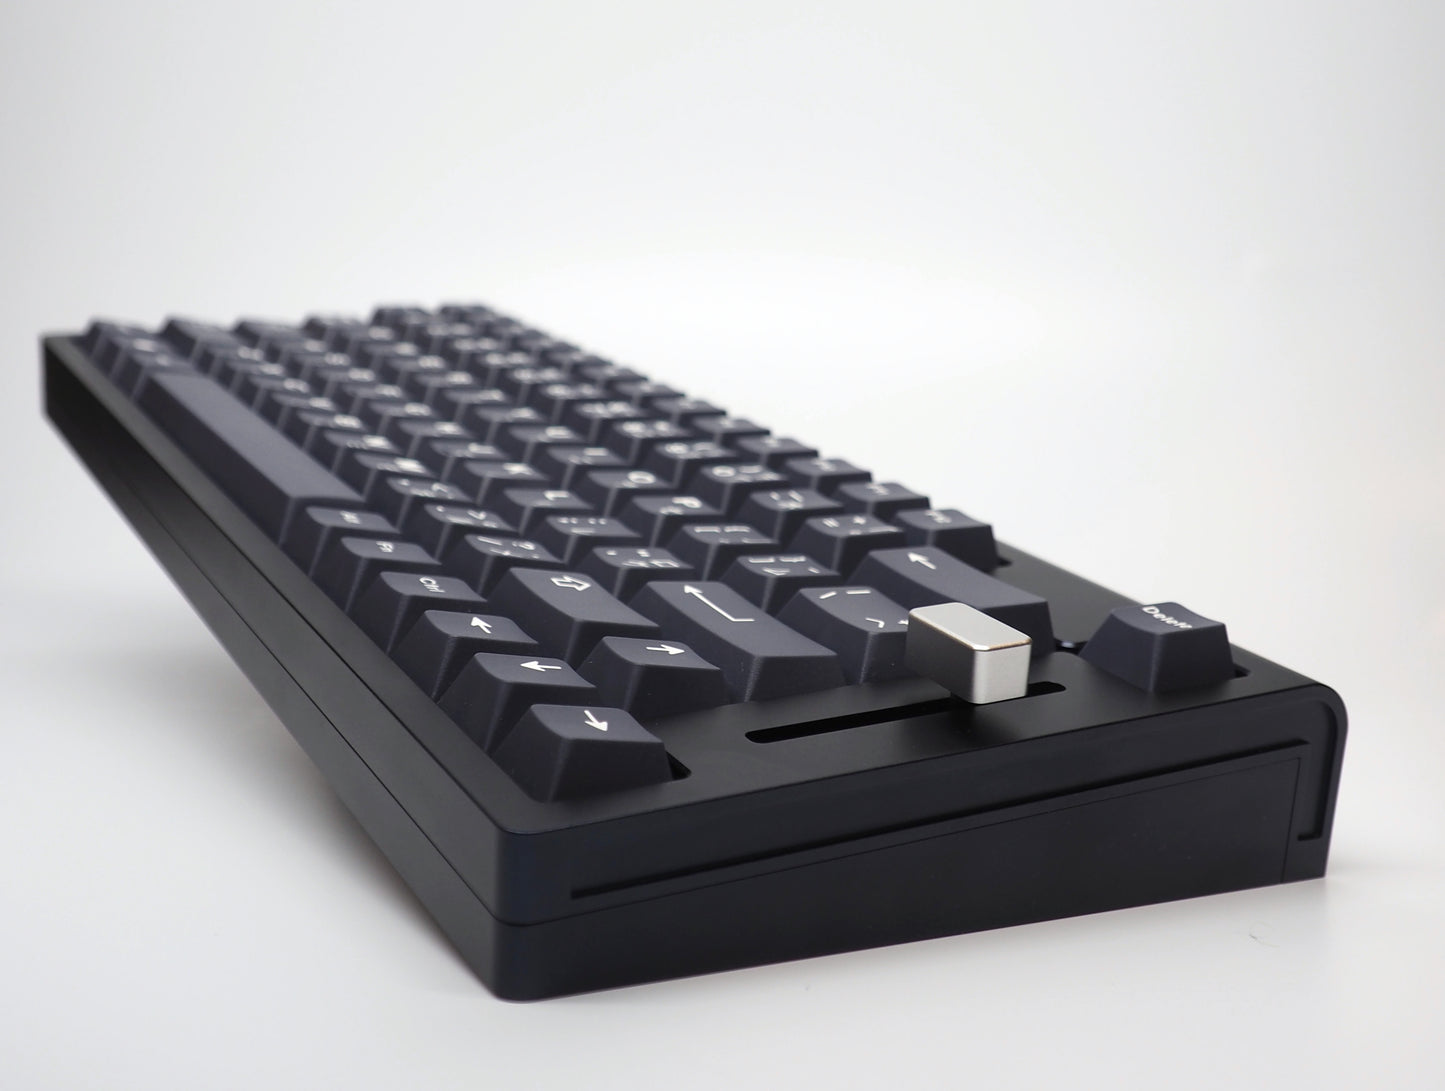 FjordBoard 75% Keyboard [GB]